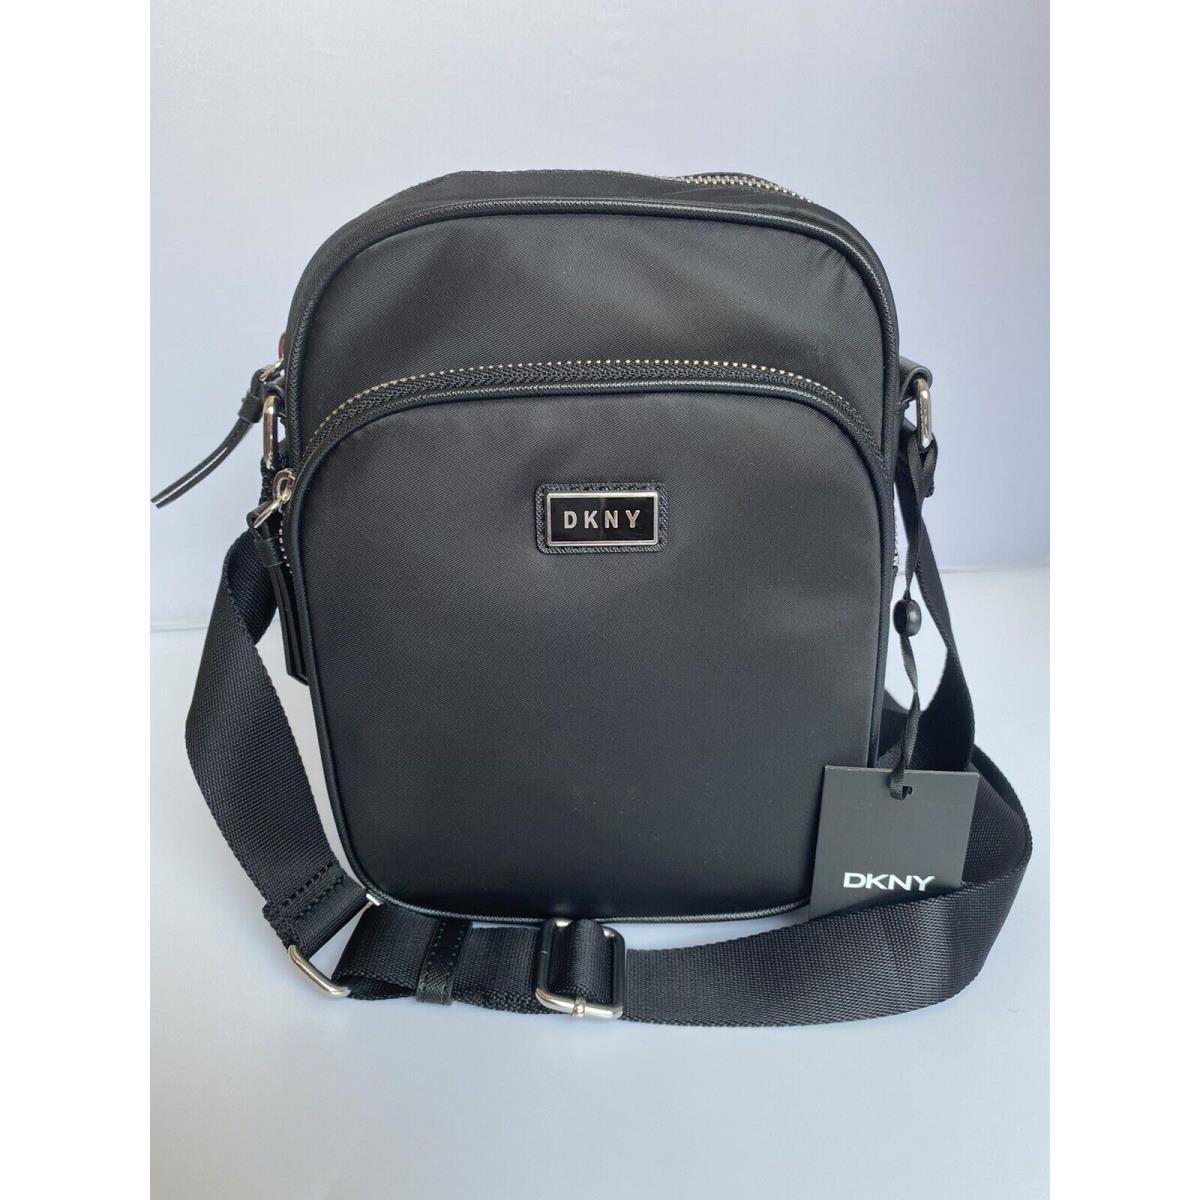 Dkny Gigi DZ Cossbody Bag Double Zip Purse Handbag Black - Lining: Black DKNY Logo Print, Exterior: Black, Handle/Strap: Black